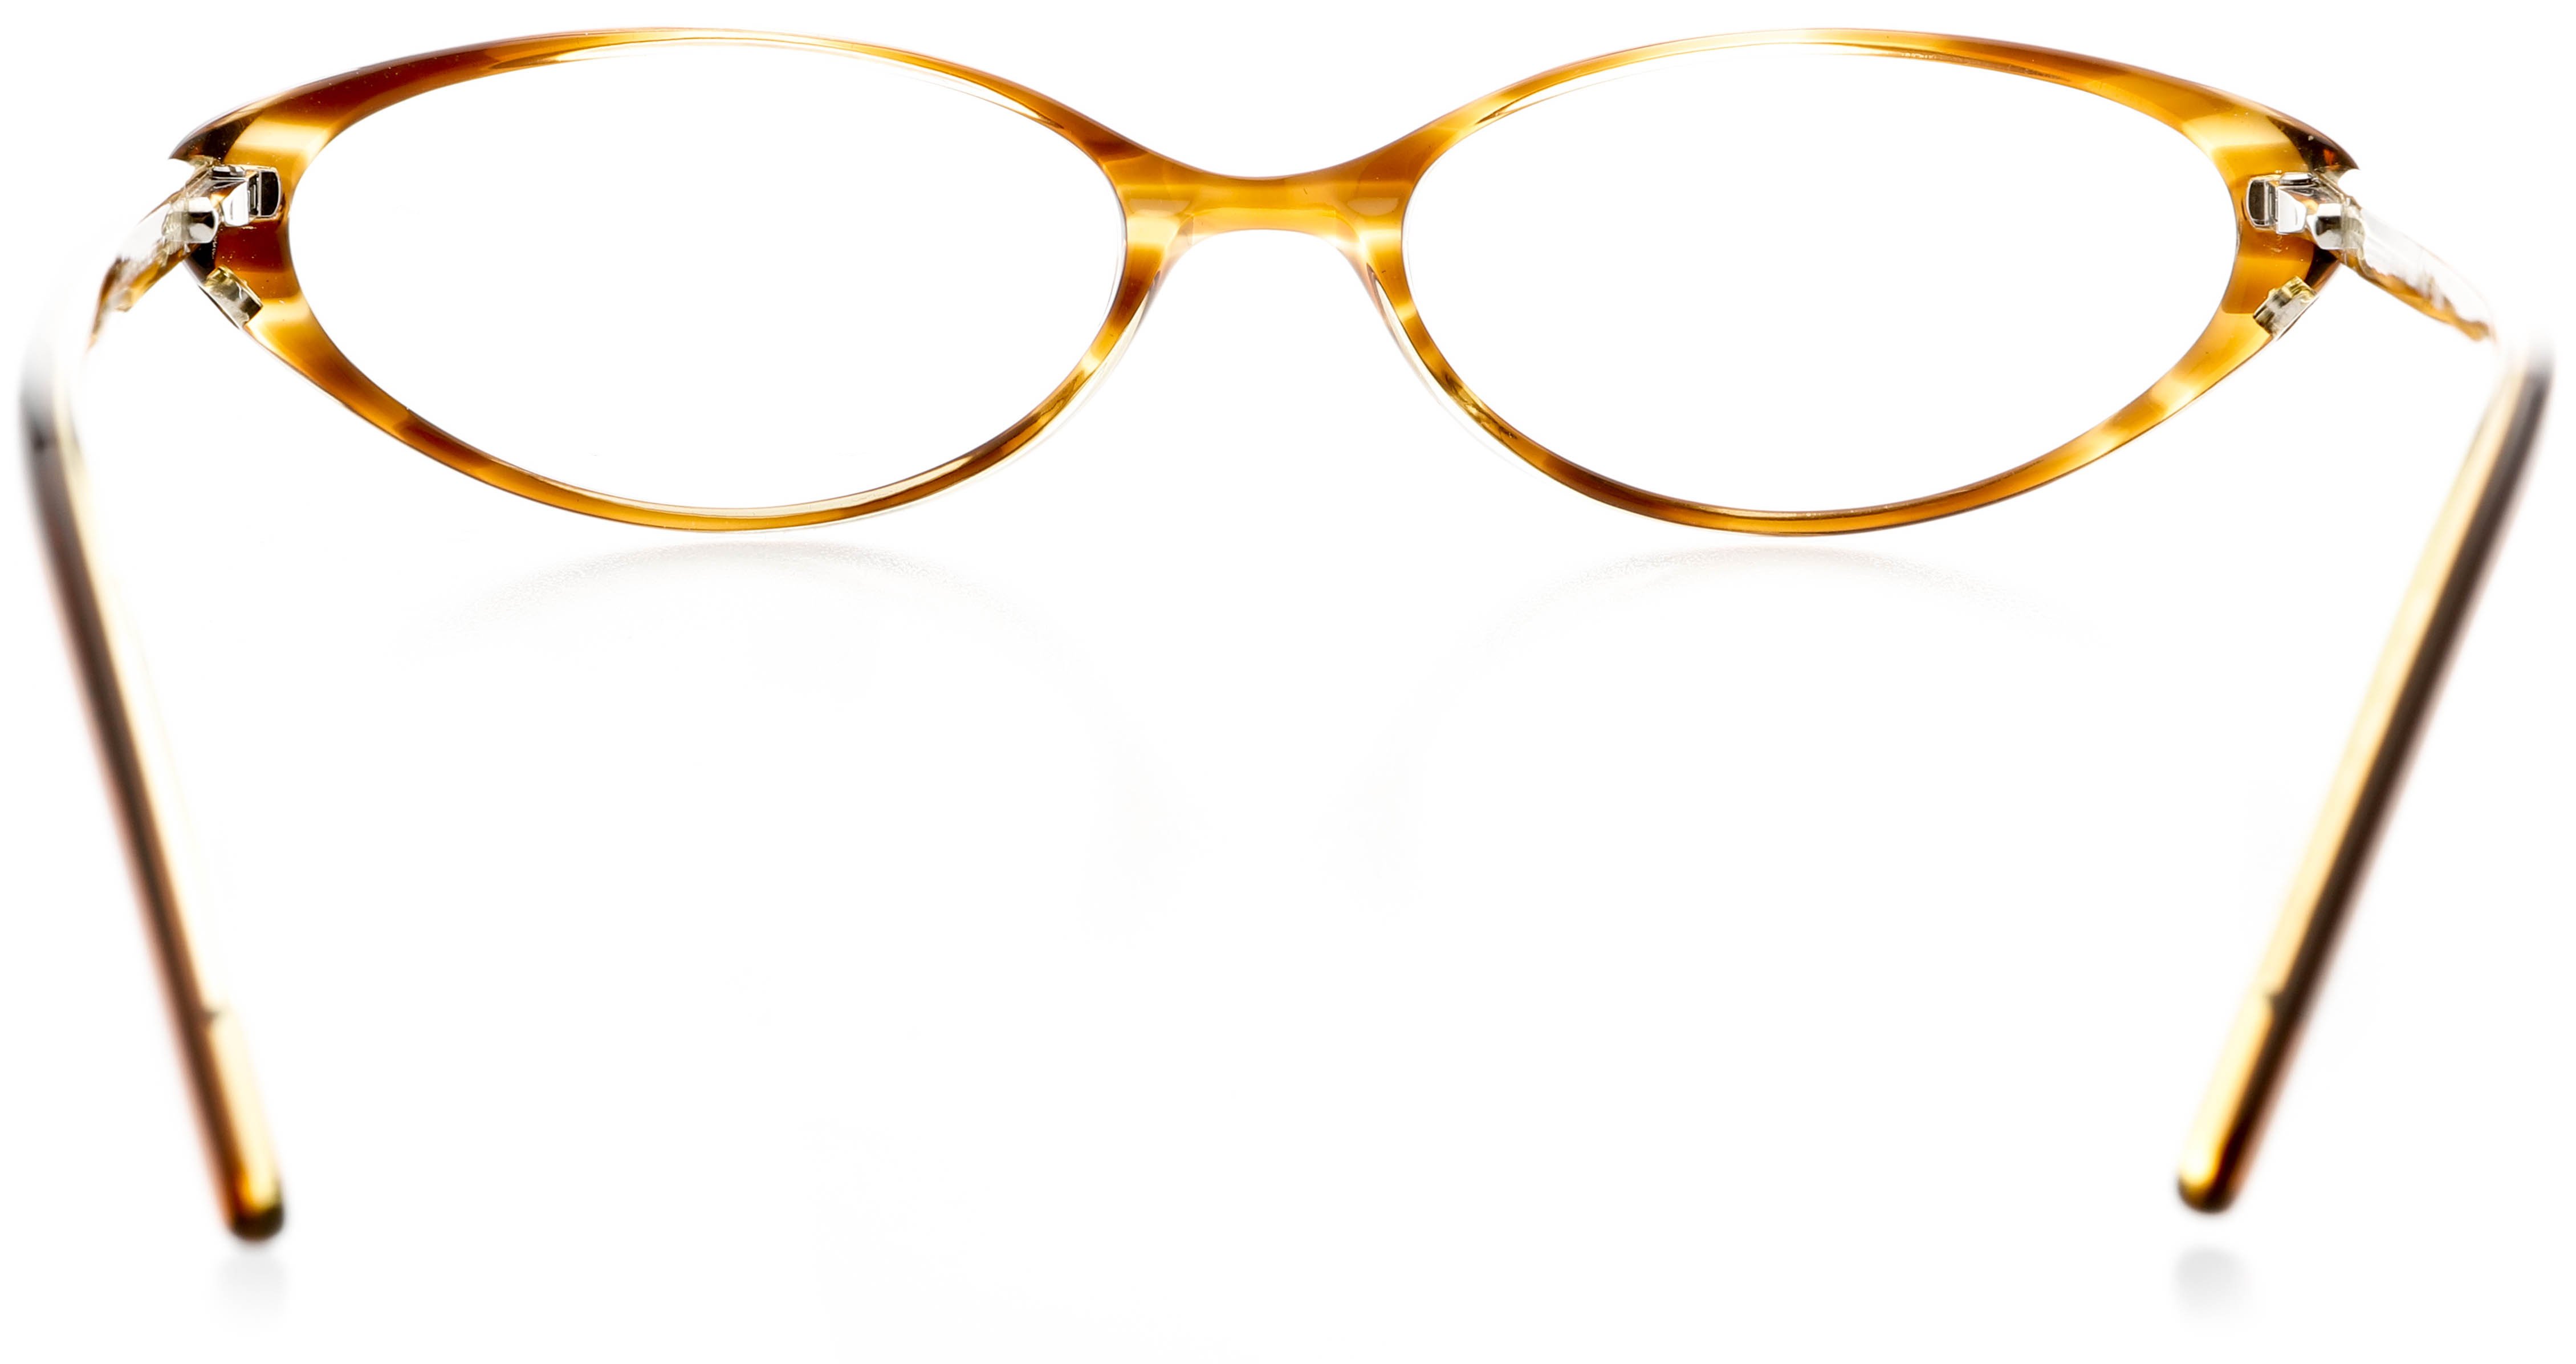 Womens Optical Eyewear - Oval Shape, Plastic Full Rim, Hazel - image 4 of 4